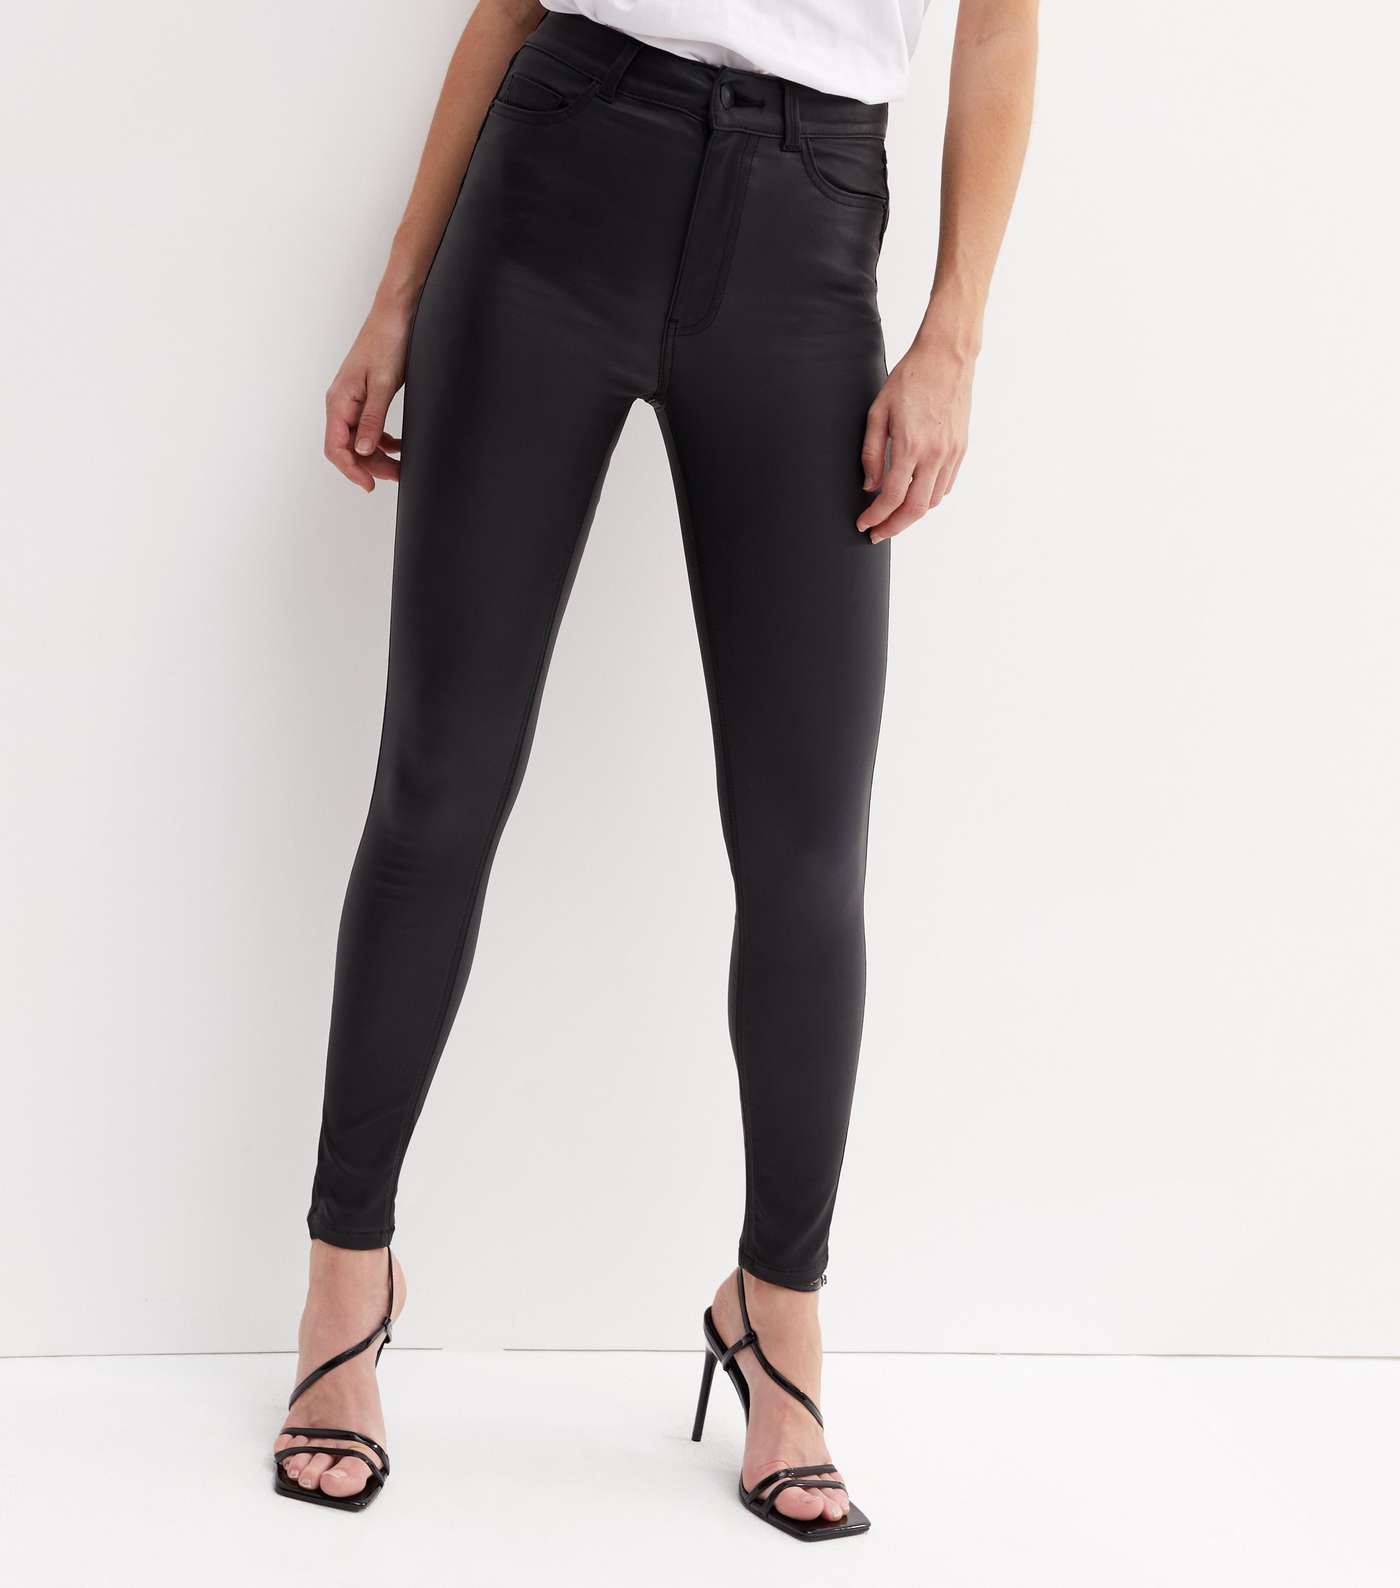 Black Coated Leather-Look Lift & Shape Jenna Skinny Jeans Image 6